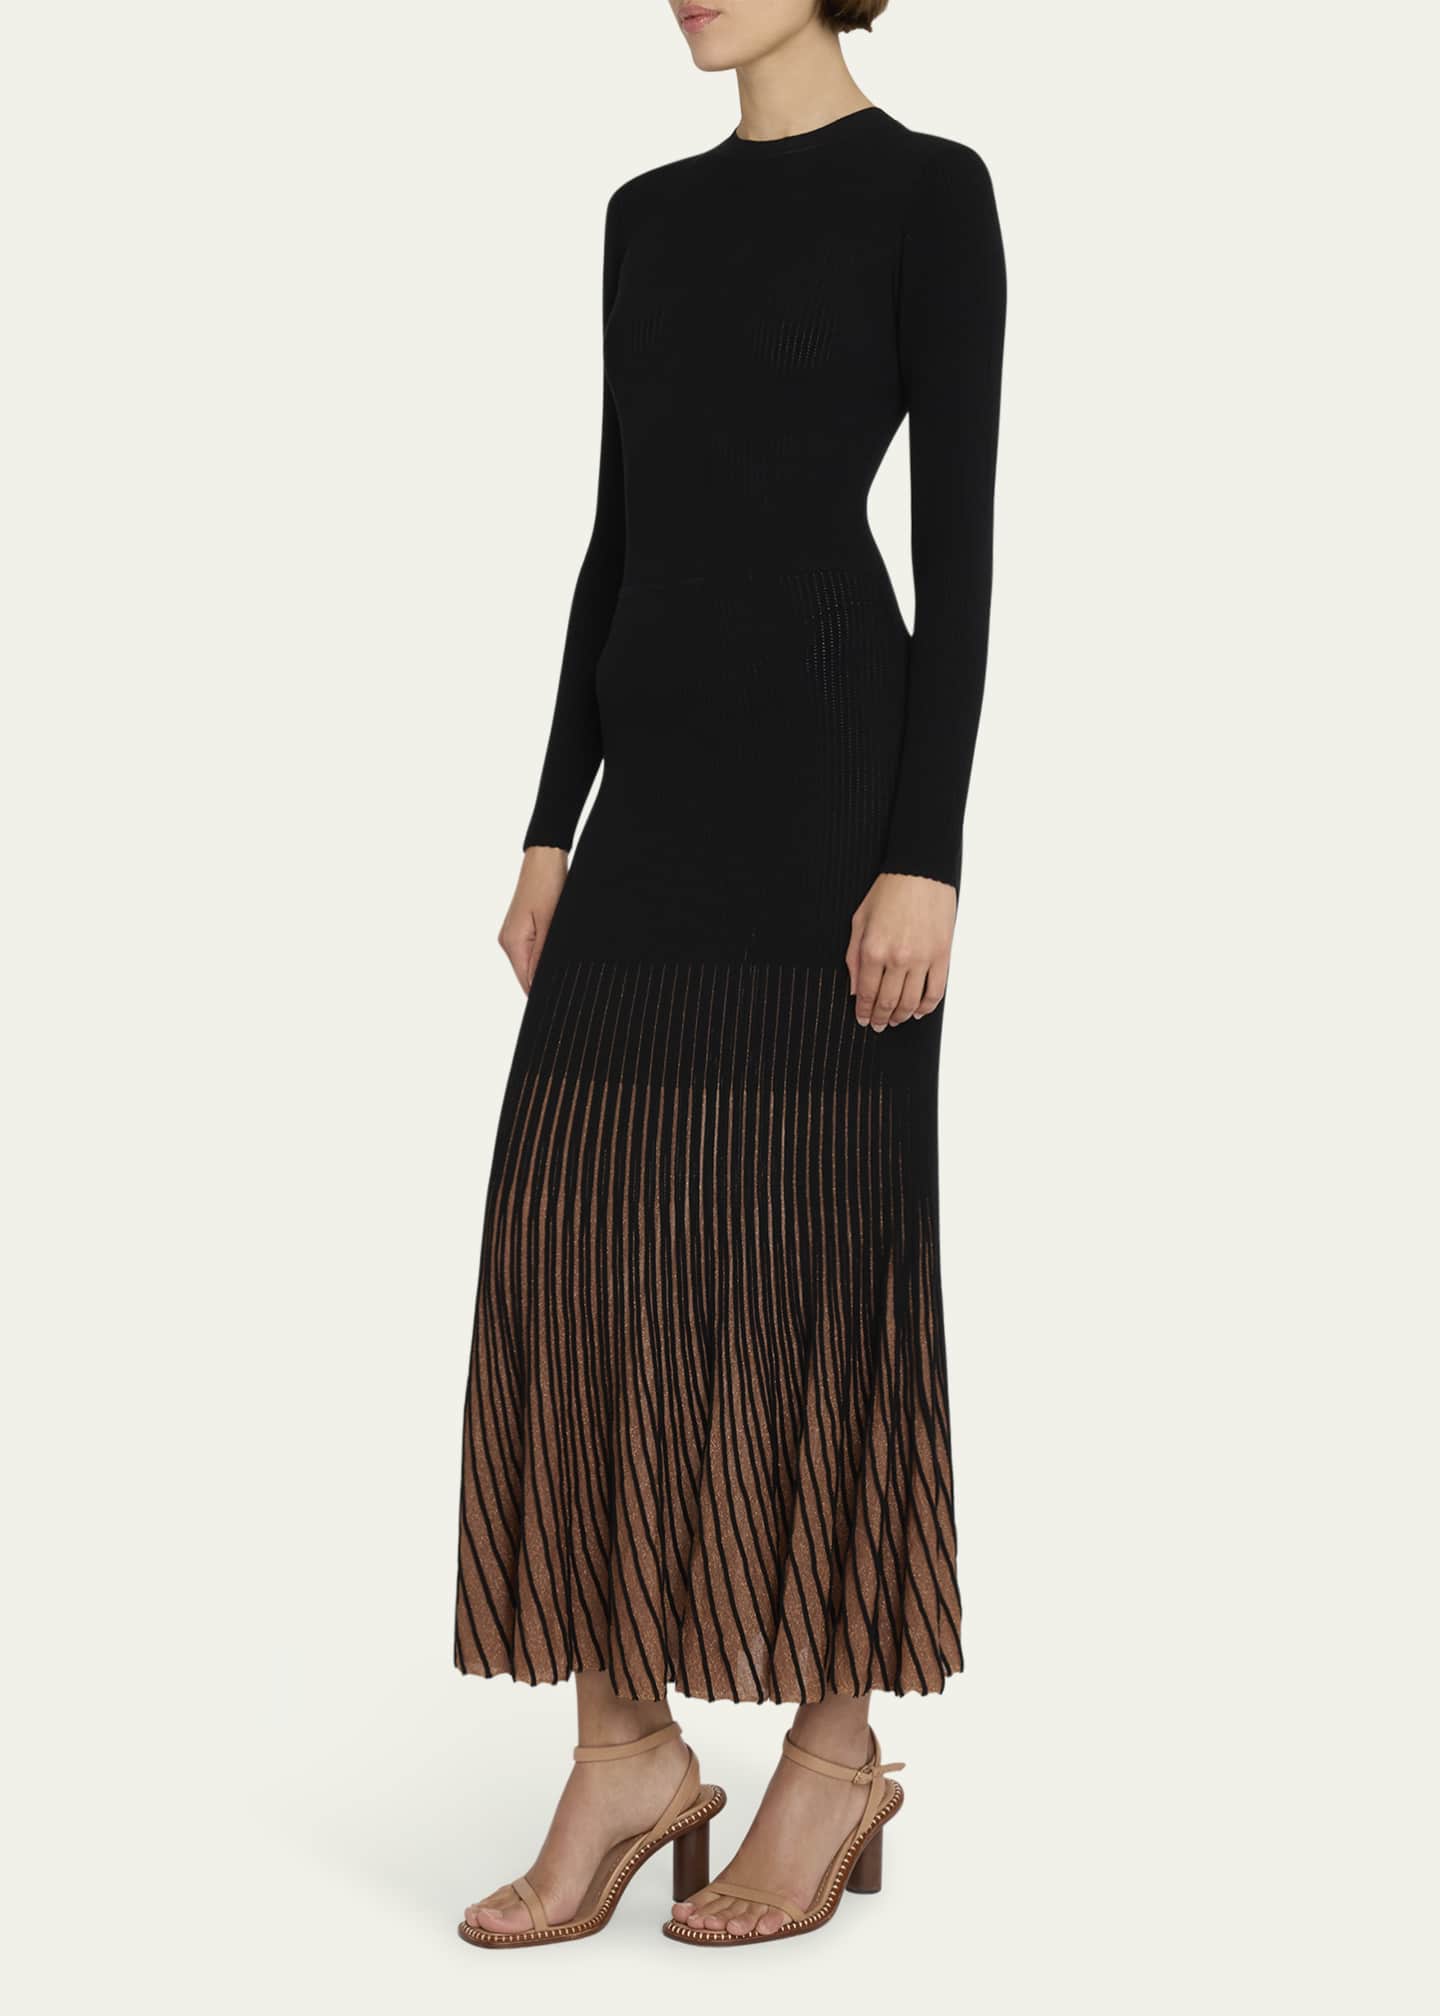 Ulla Johnson Magnolia Two-Tone Sunburst Knit Midi Dress - Bergdorf Goodman